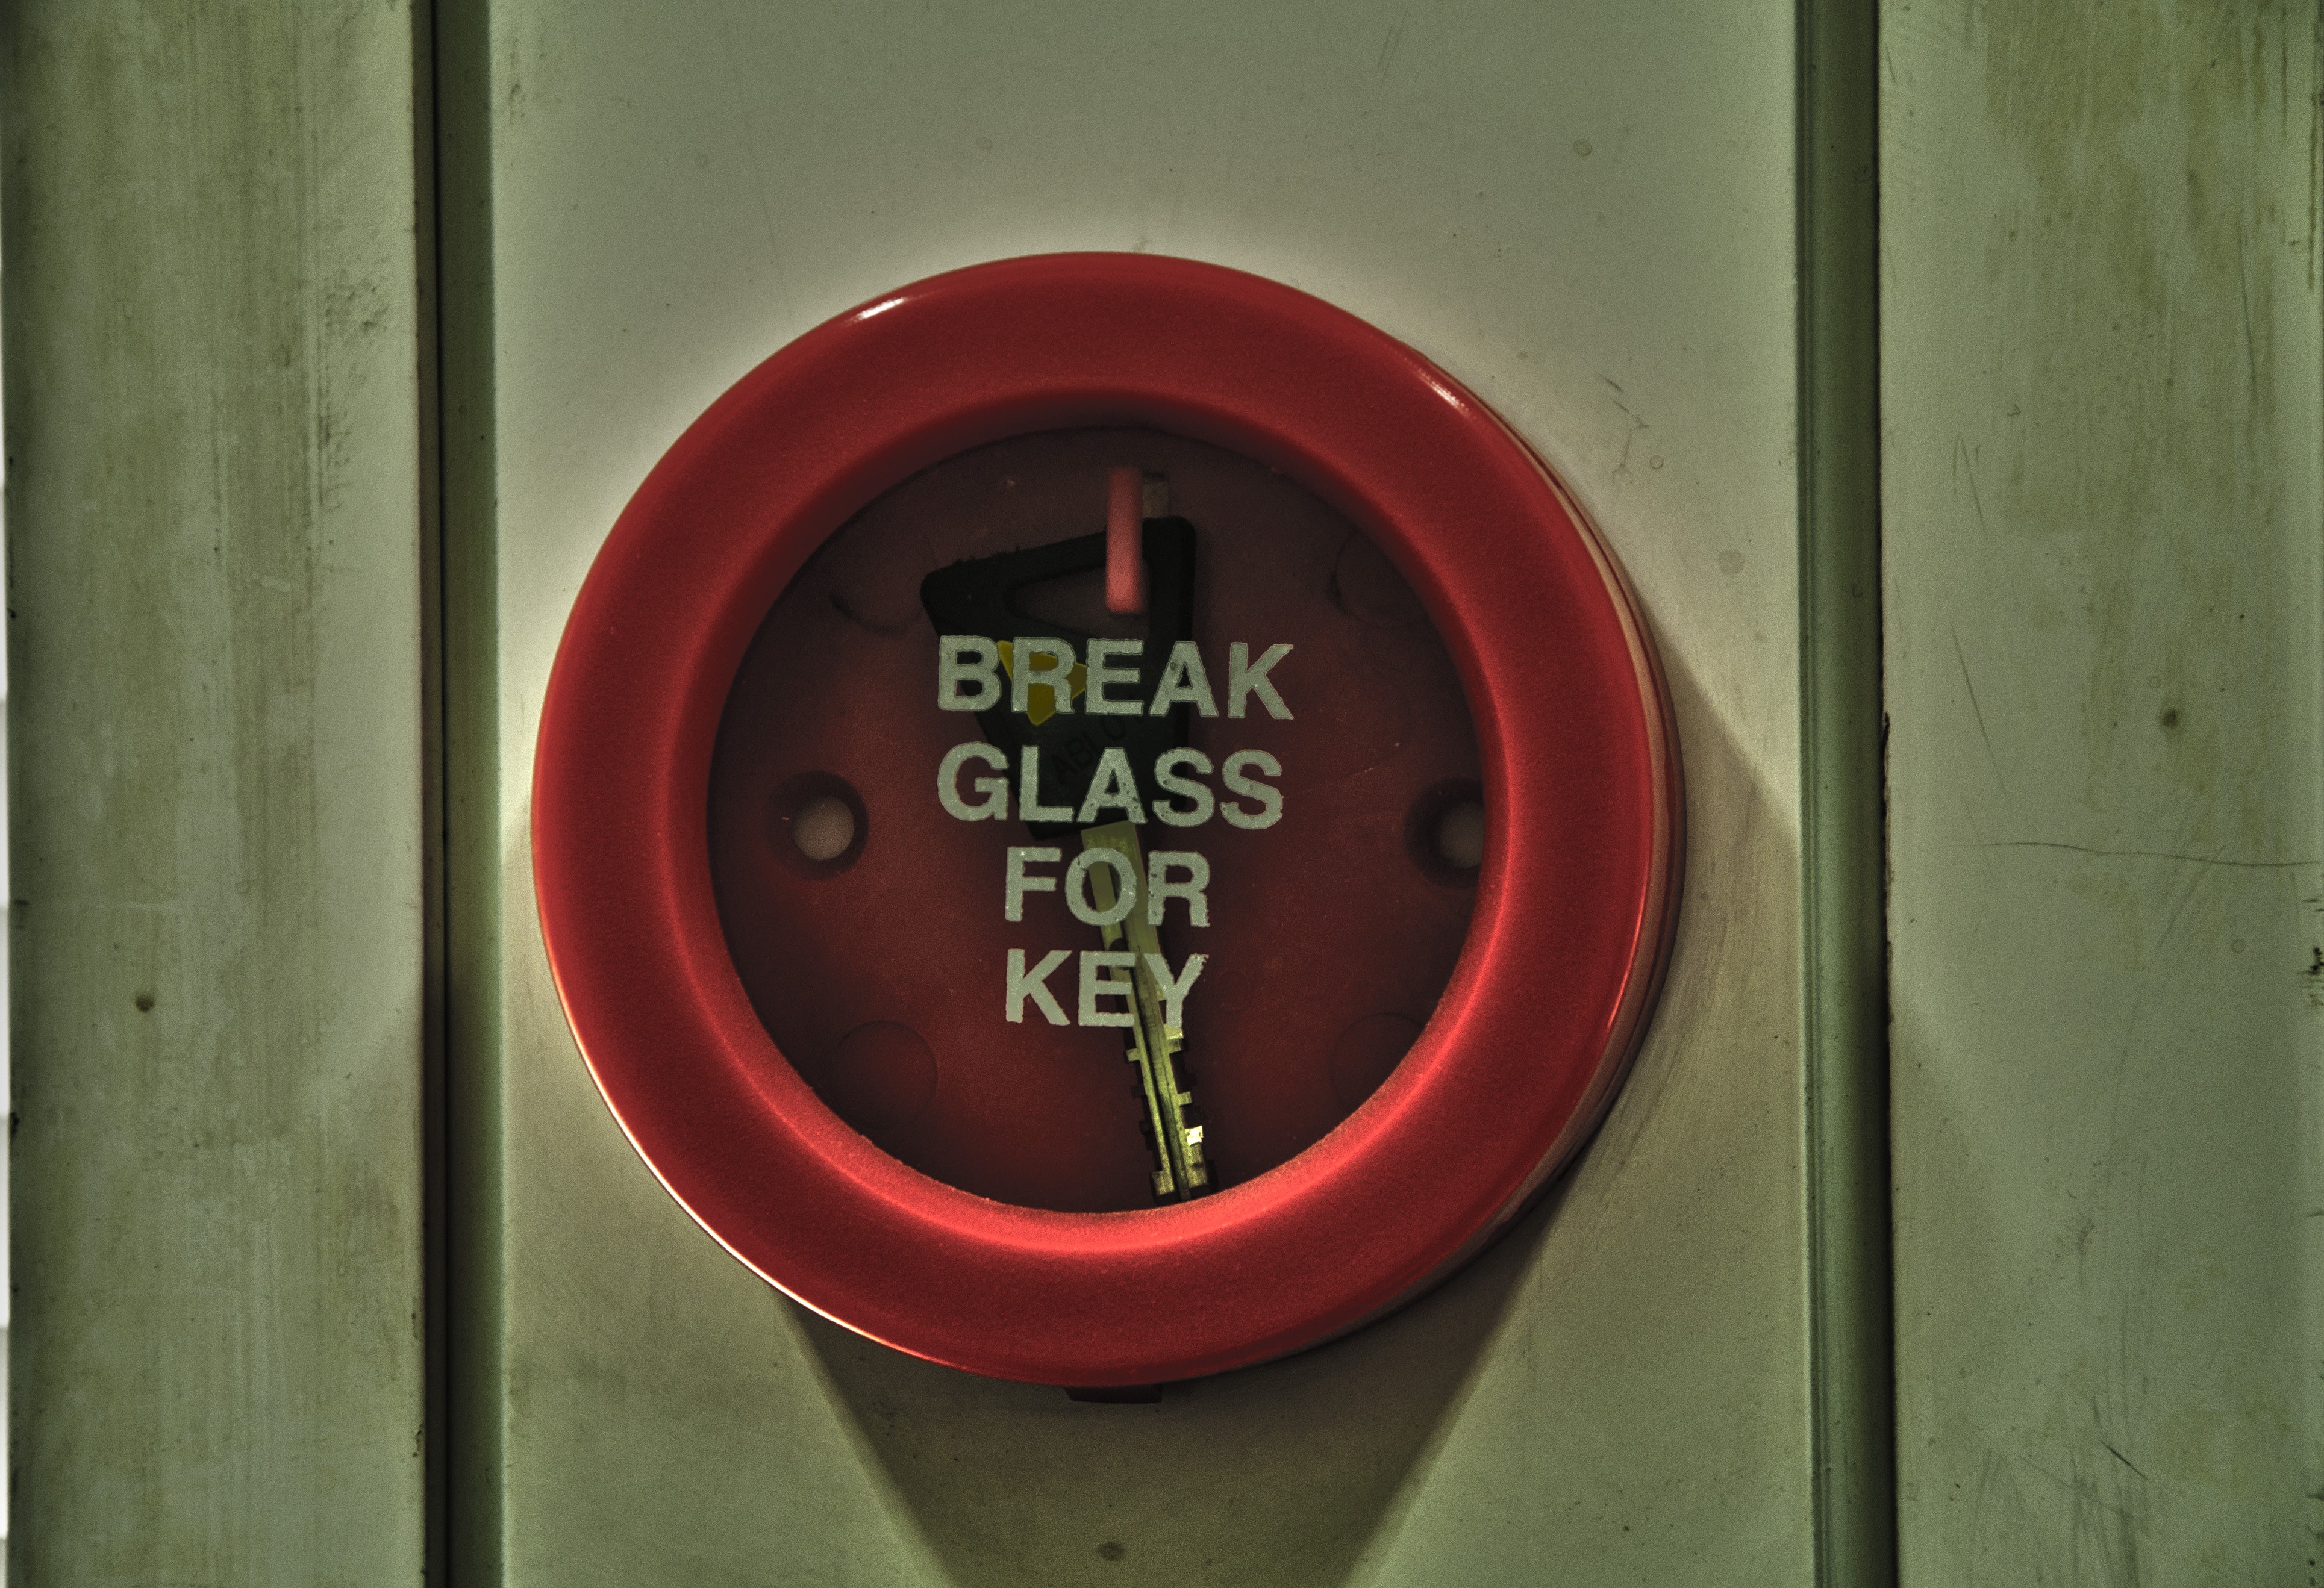 Break glass for key